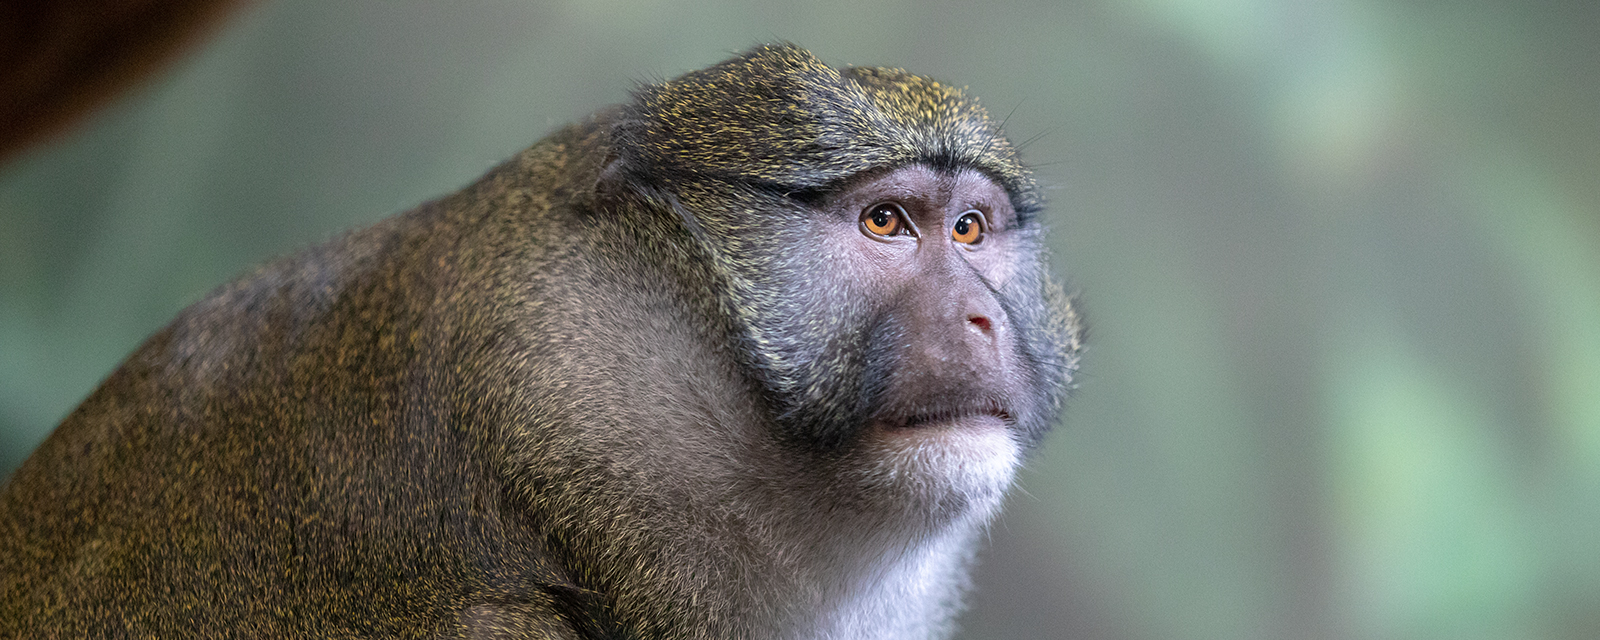 Allen's Swamp Monkey - Lincoln Park Zoo